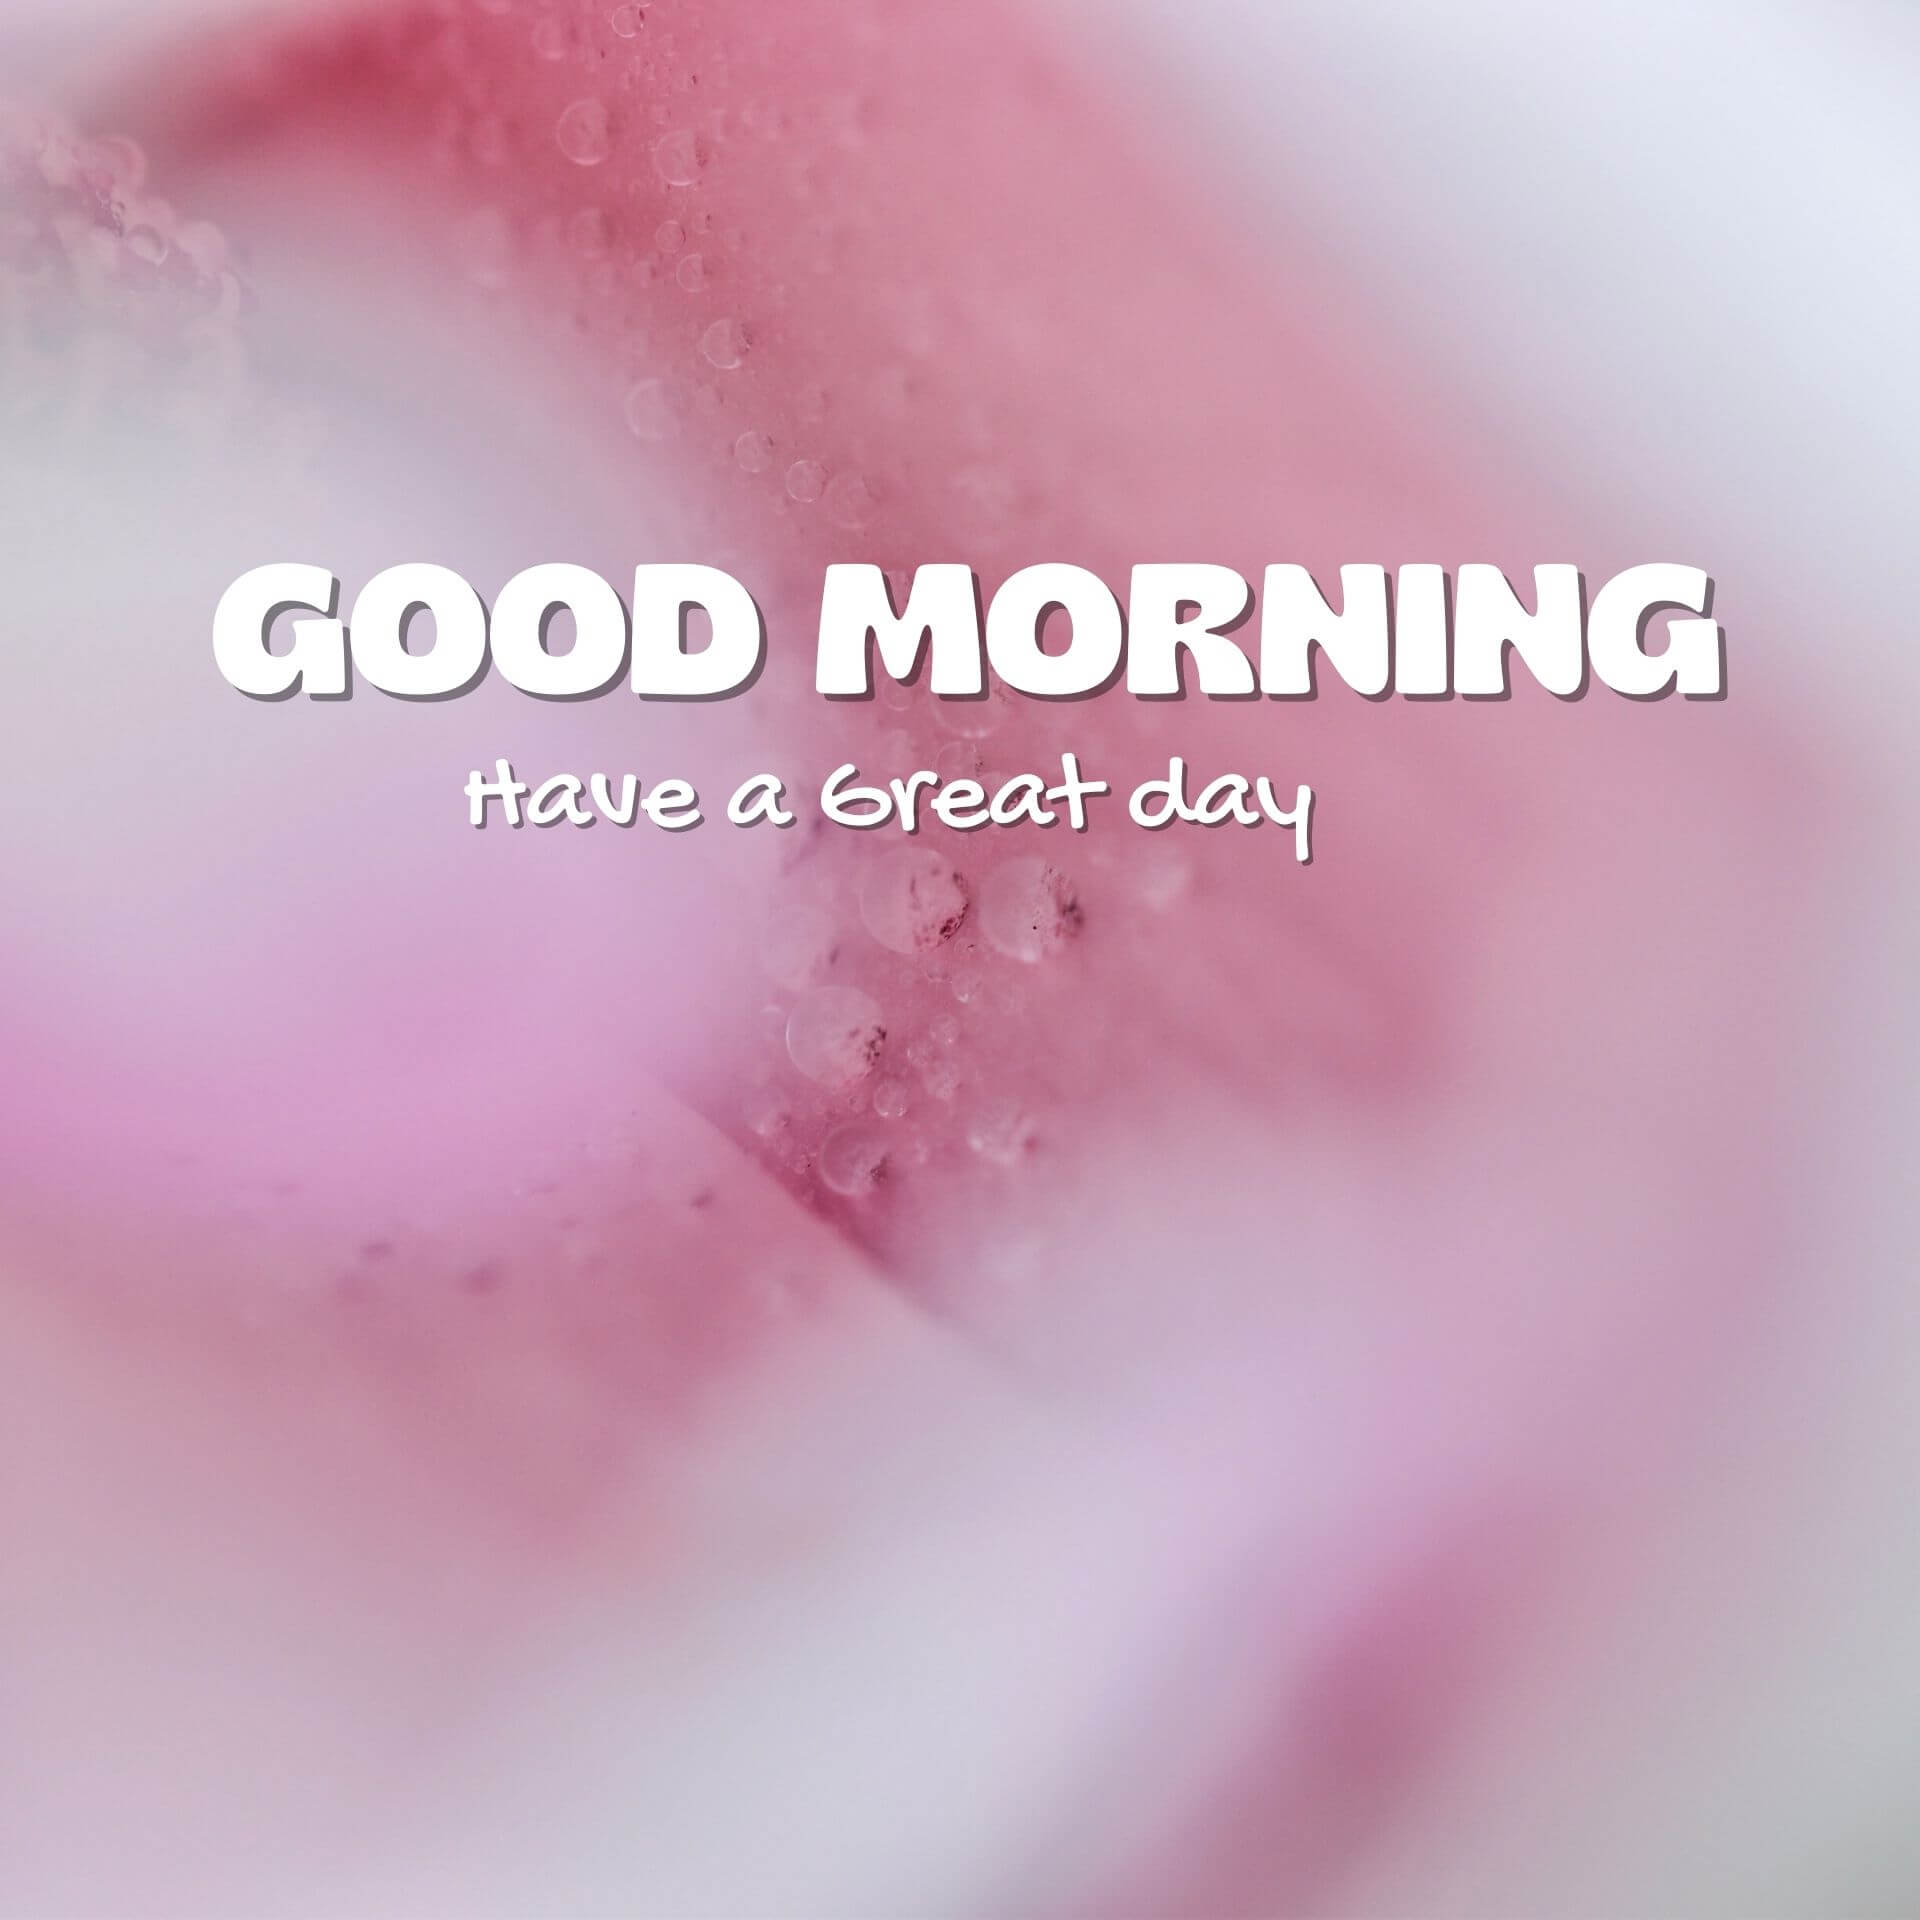 4k Ultra HD Good Morning Wallpaper Free Download